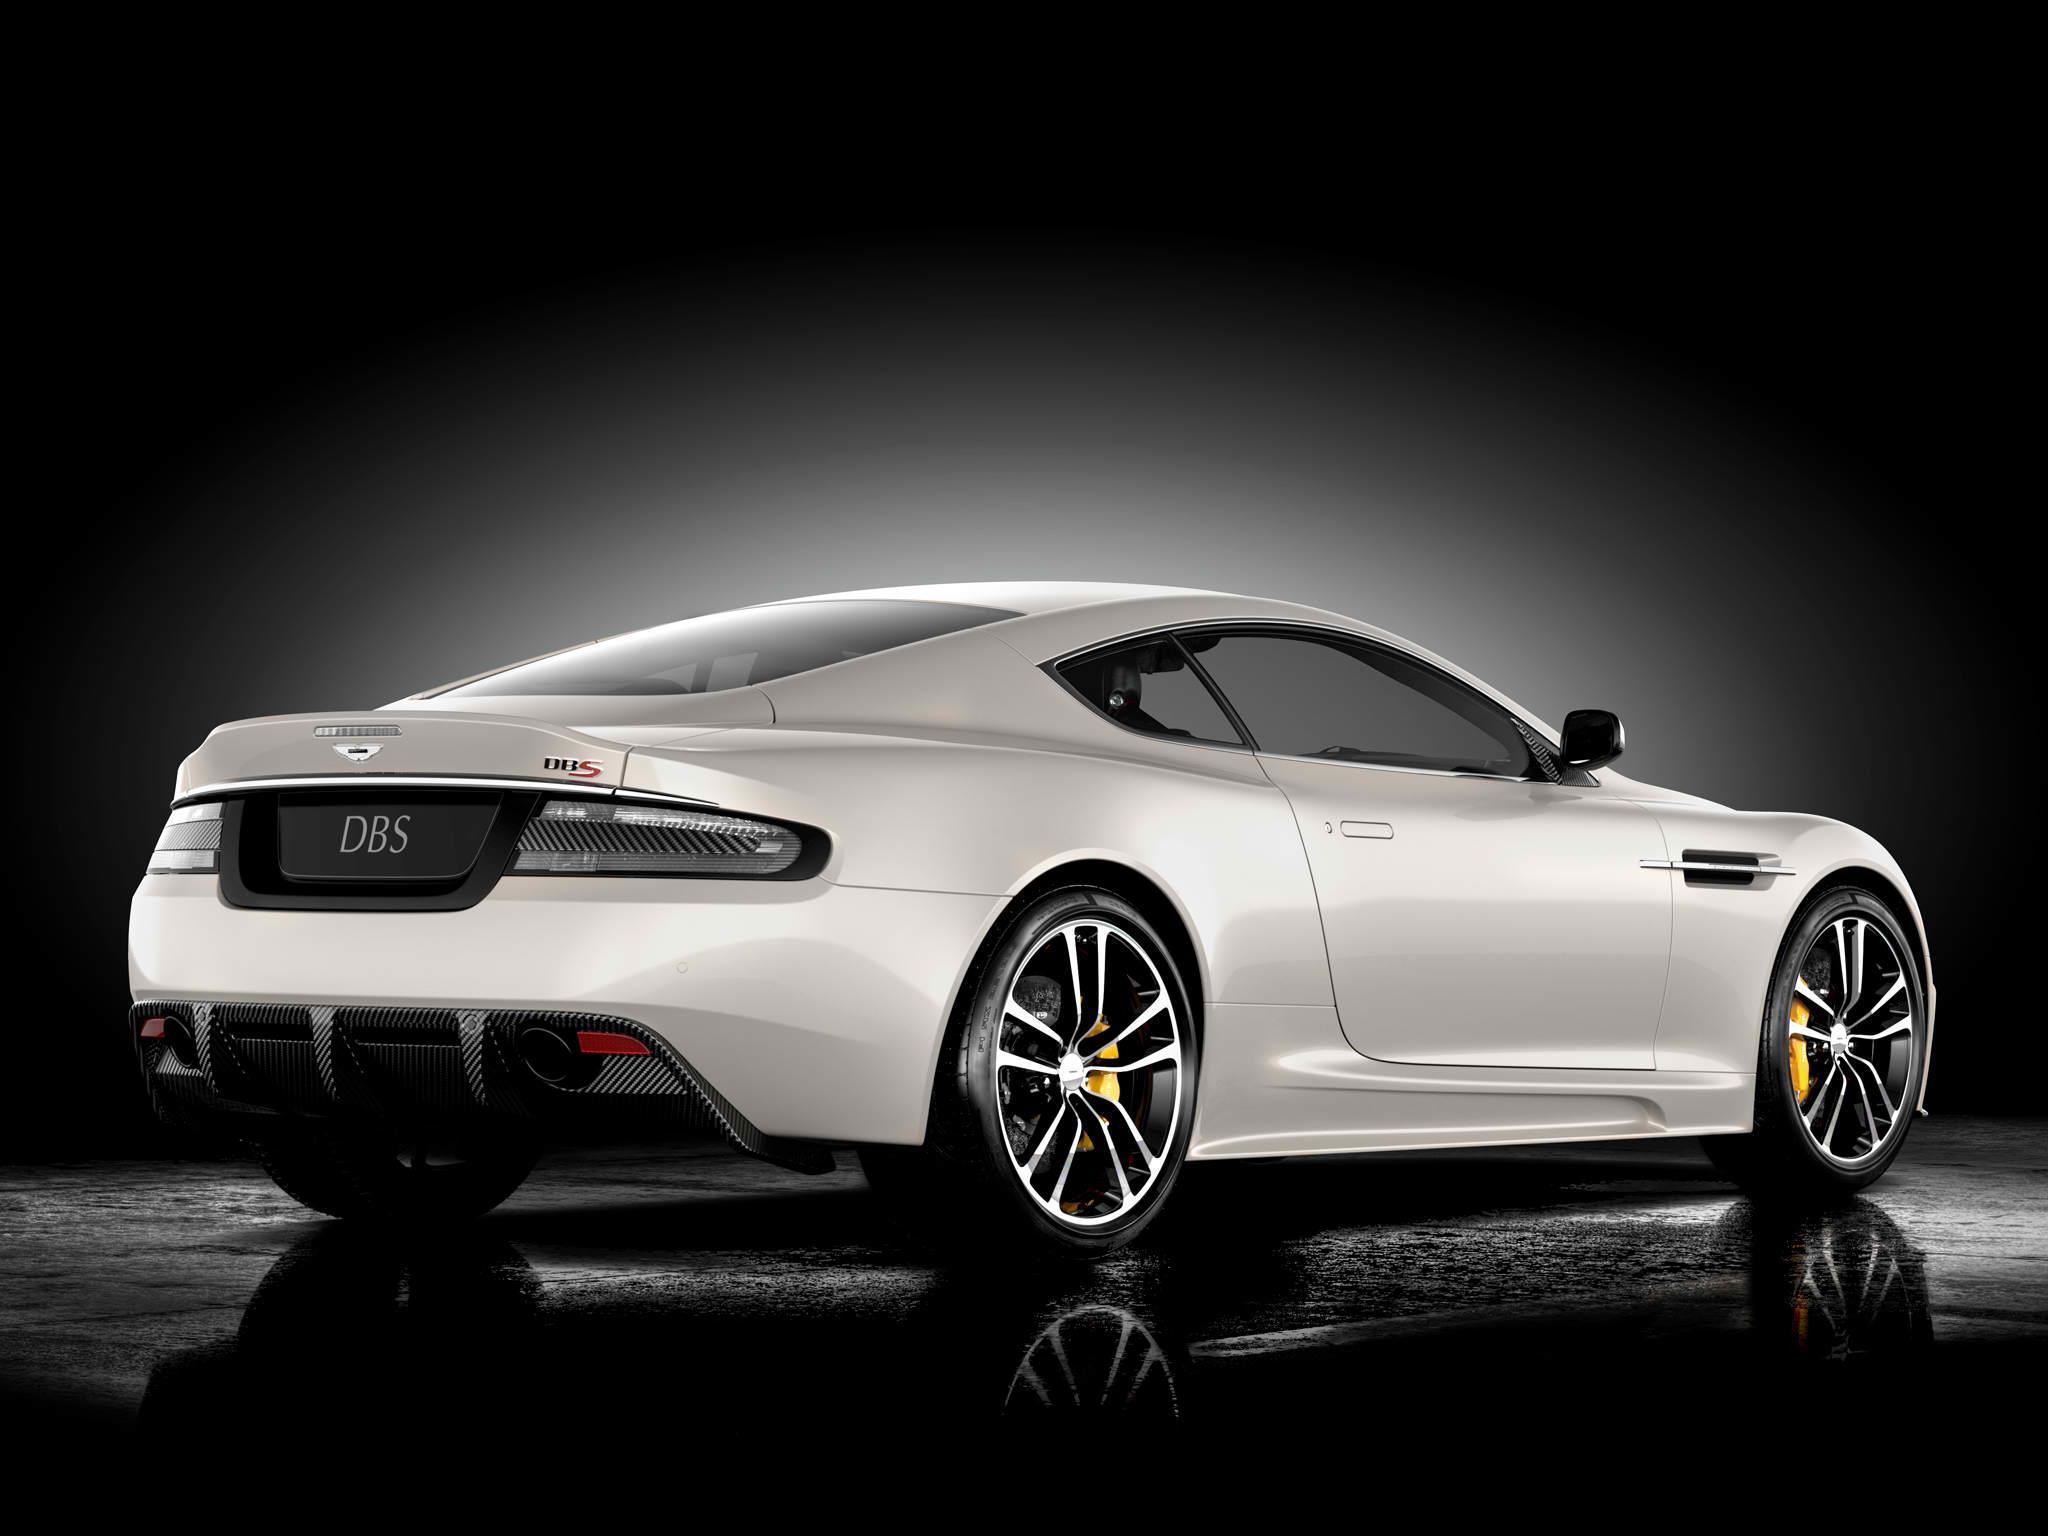 Aston Martin DBS Wallpaper Photo